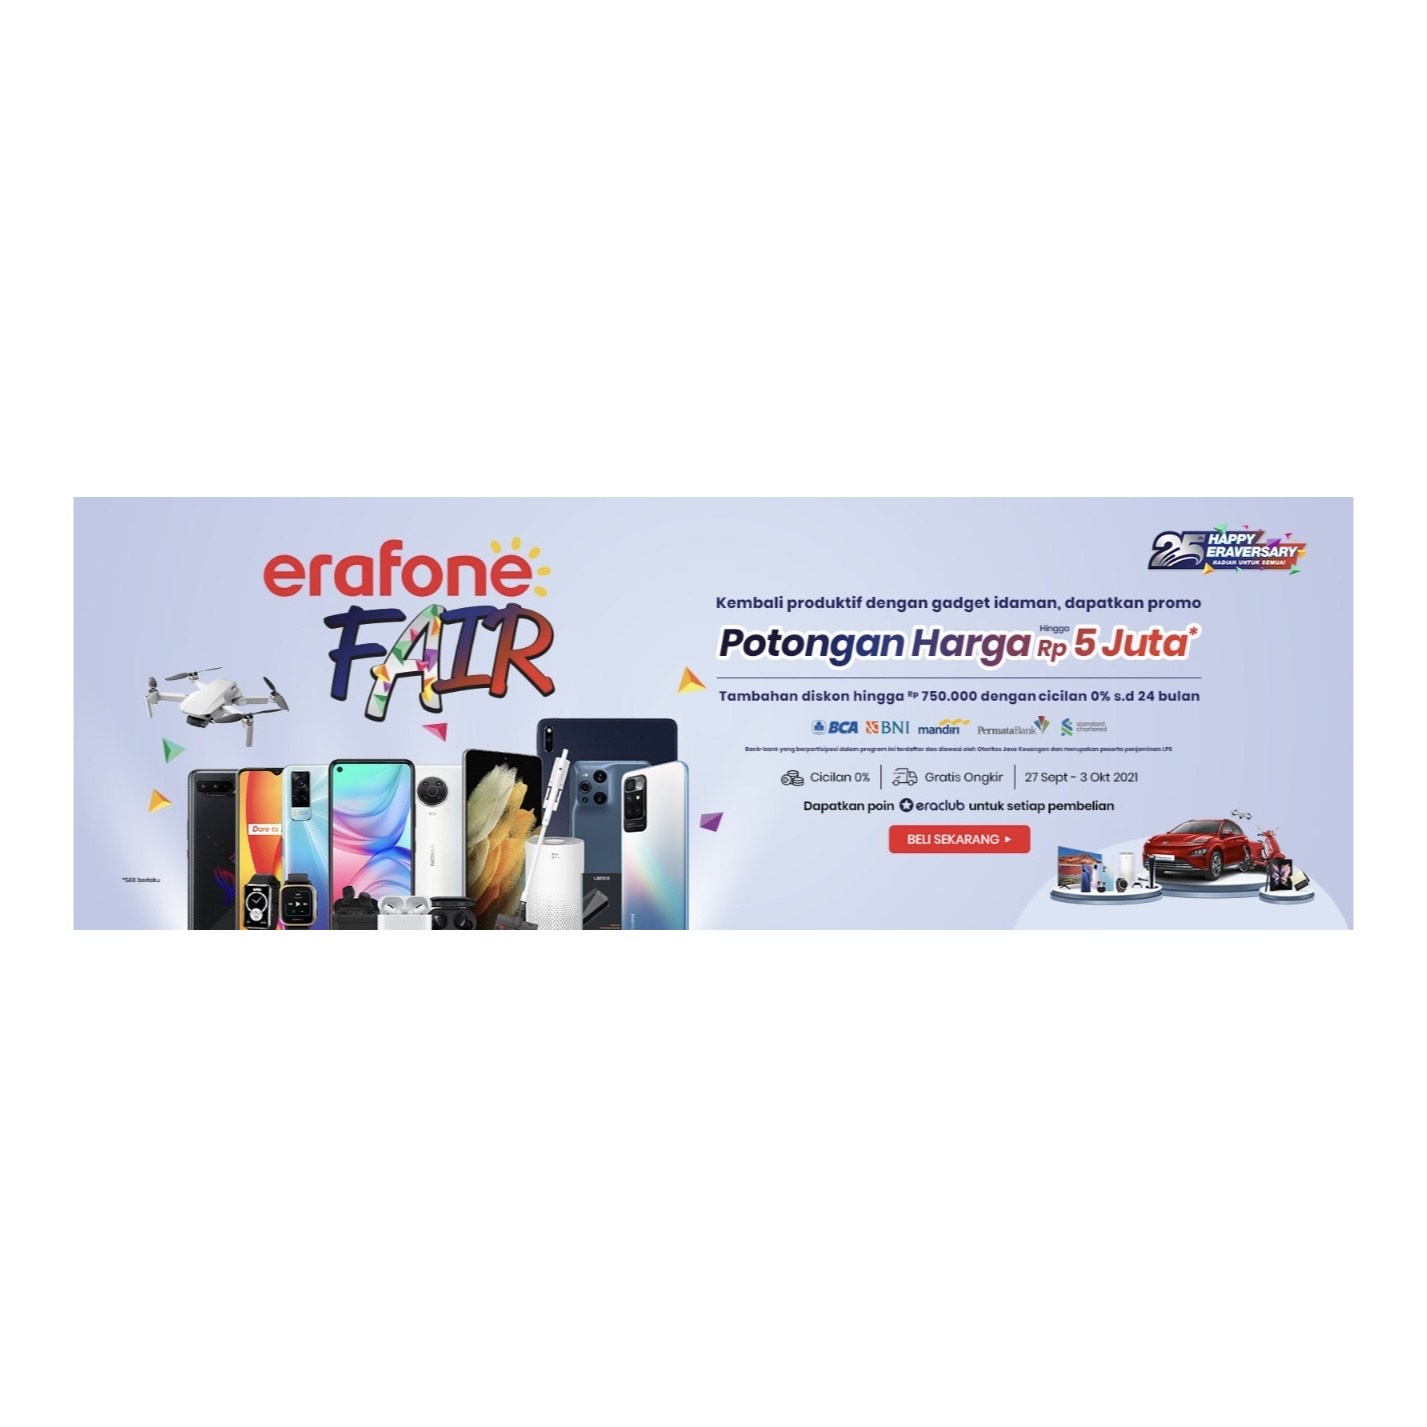 erafone-fair-banner-resize.jpg